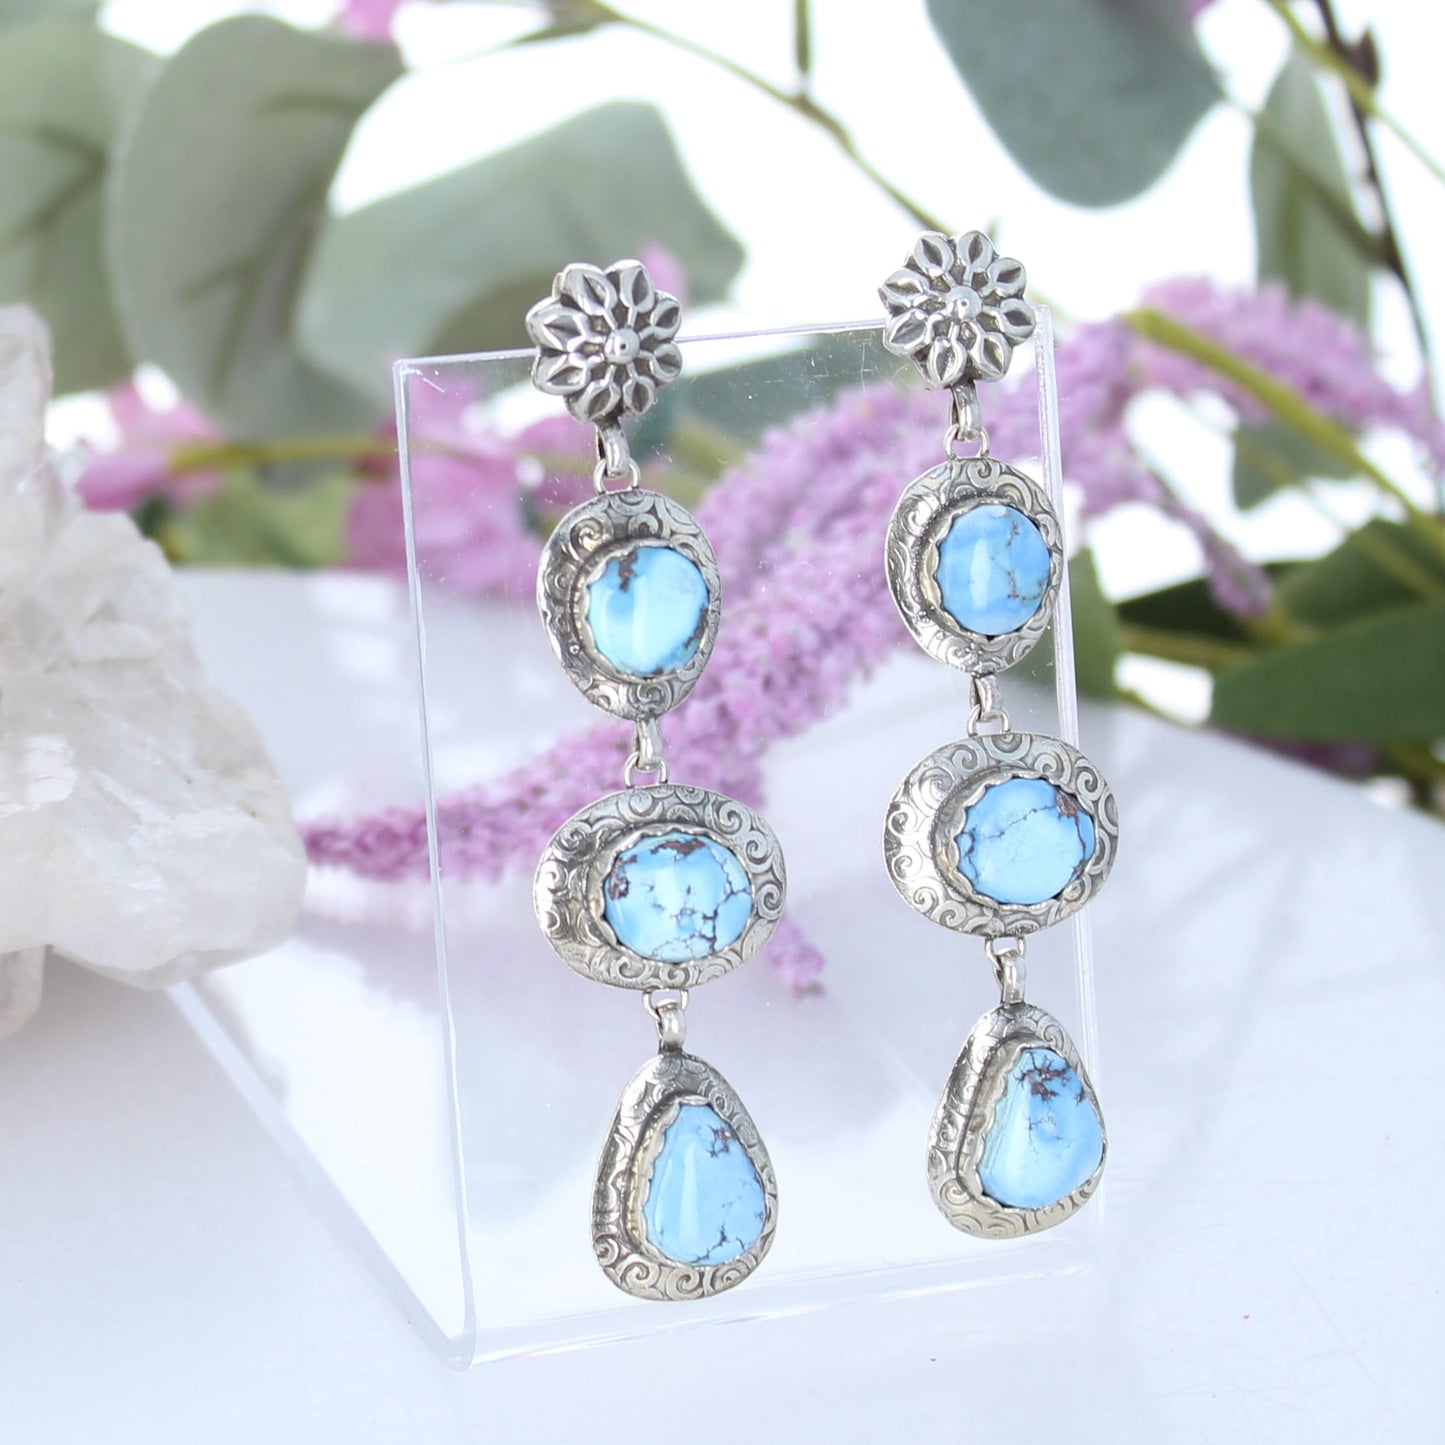 Kazakhstan Turquoise Earrings 3 Stone Baby Blue Spiral Design 3"